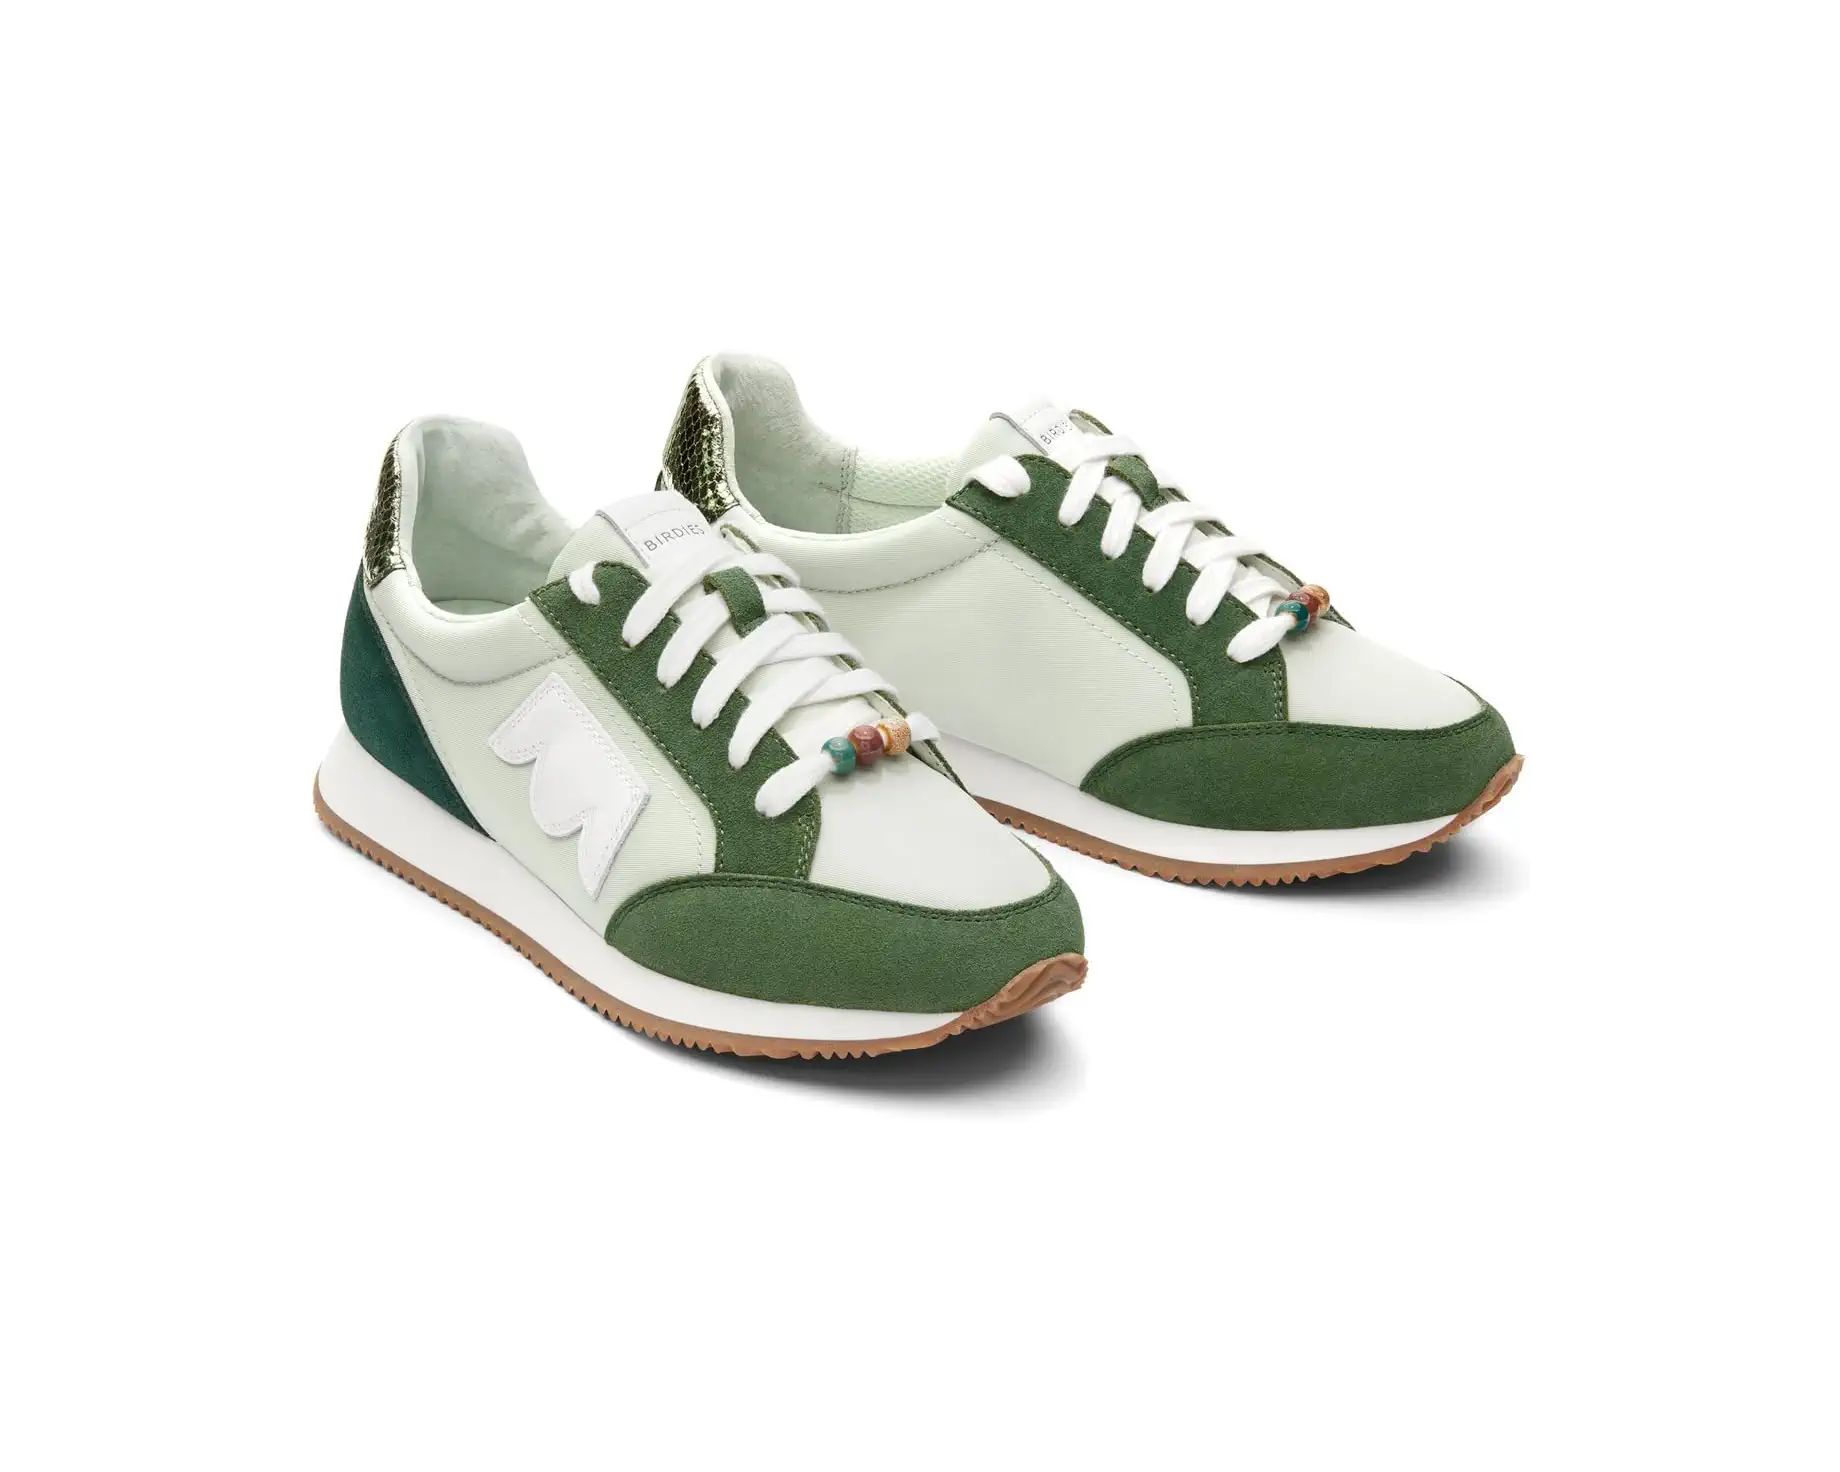 Birdies Roadrunner Nylon Sneakers | Zappos